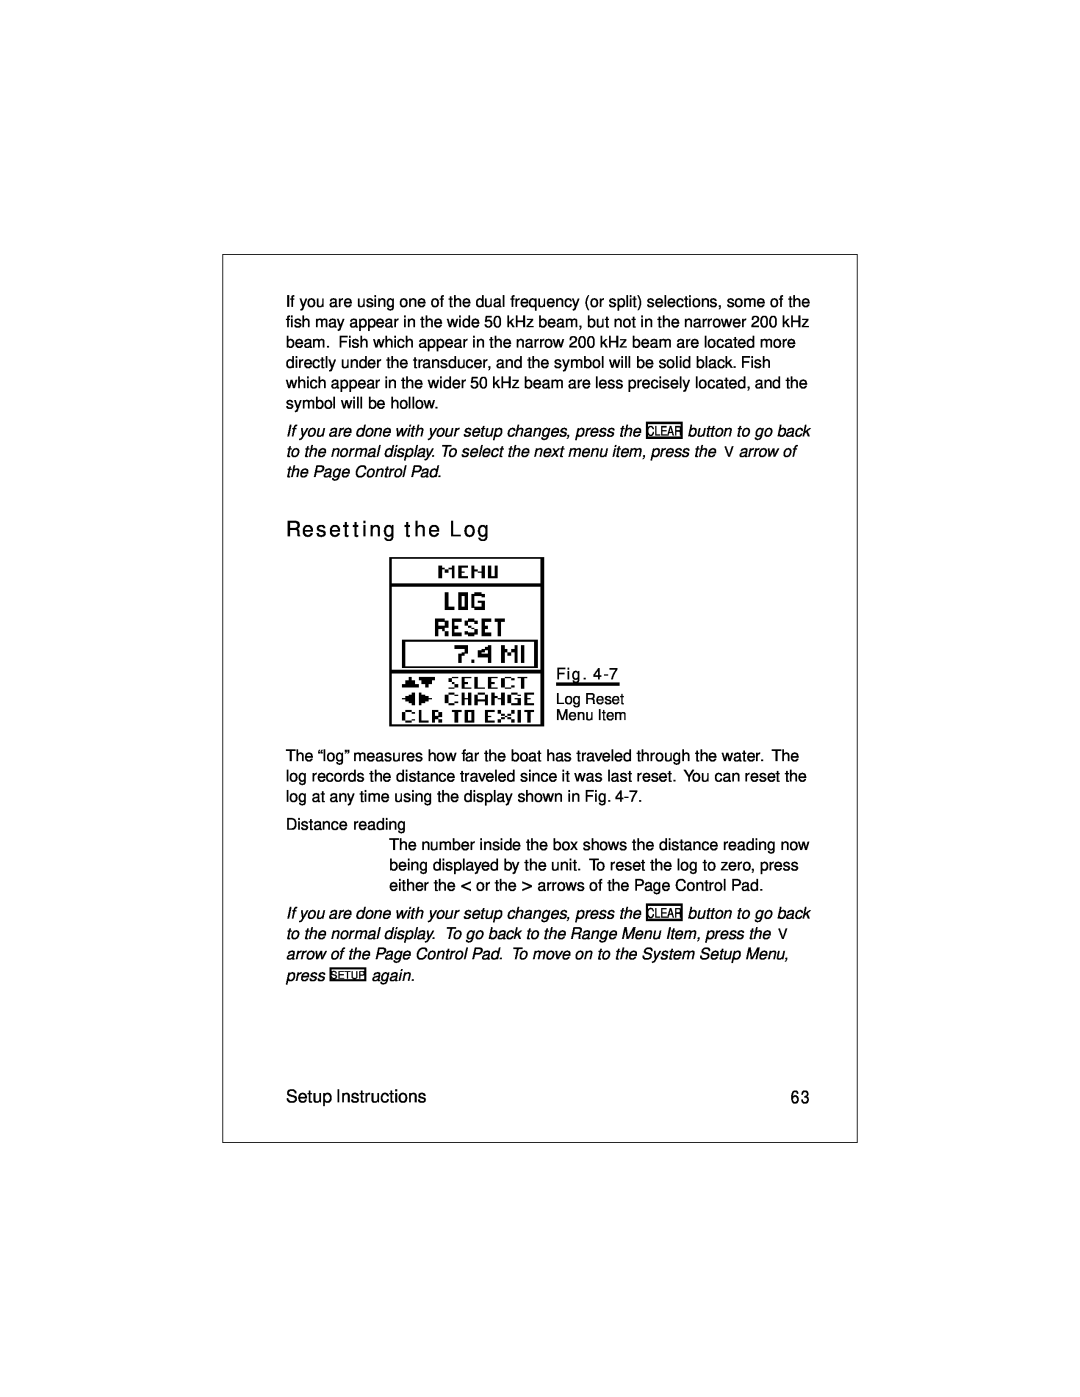 Raymarine L470 instruction manual Resetting the Log, Setup Instructions 